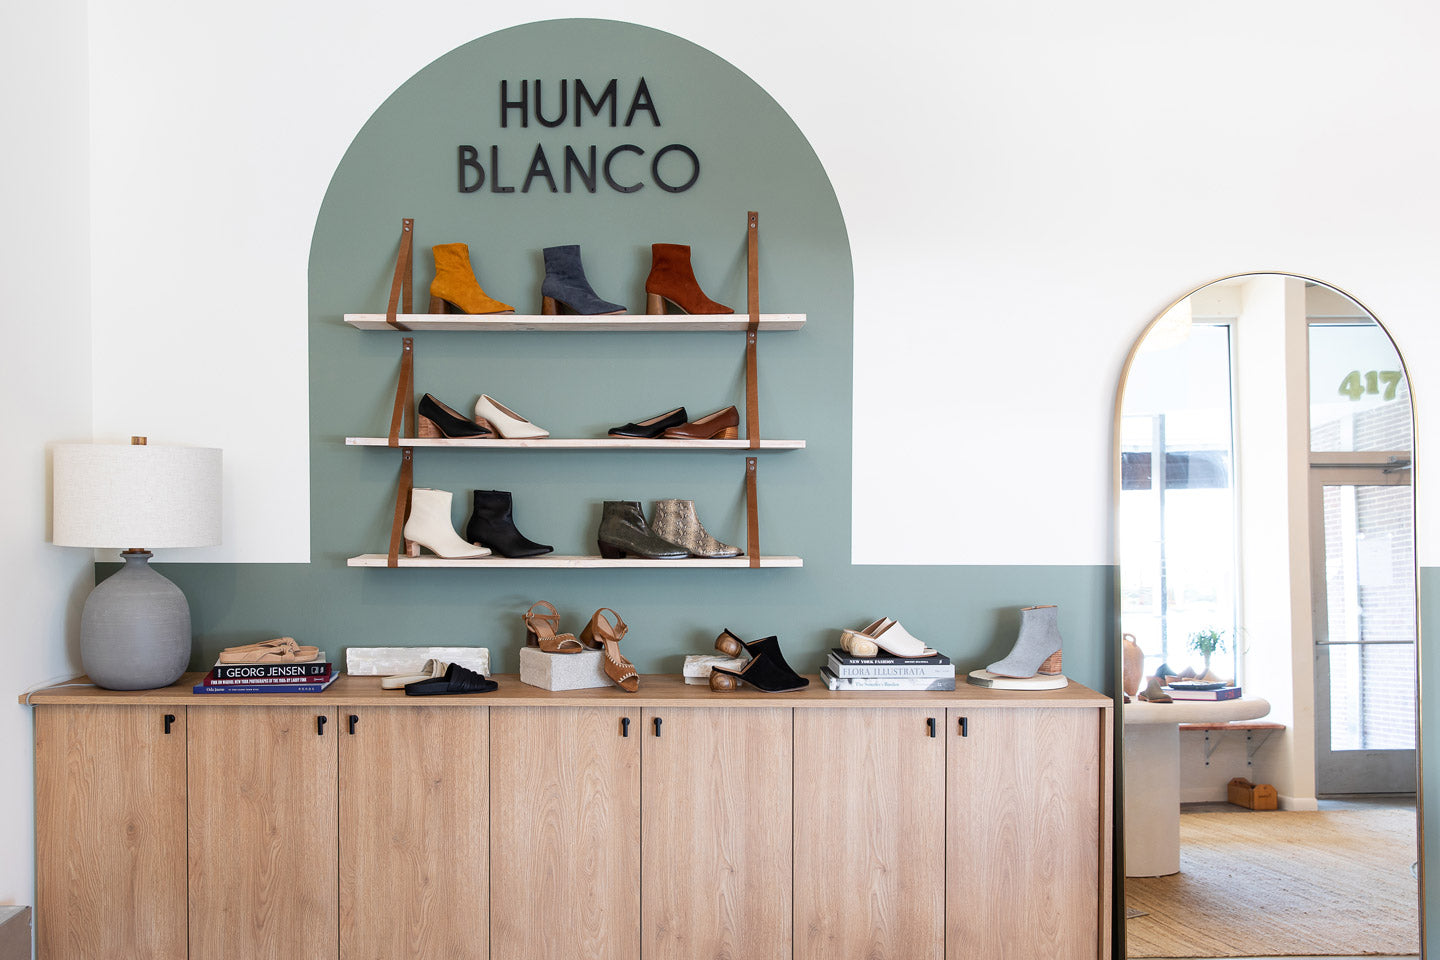 Huma Blanco shop location image in Austin, Texas